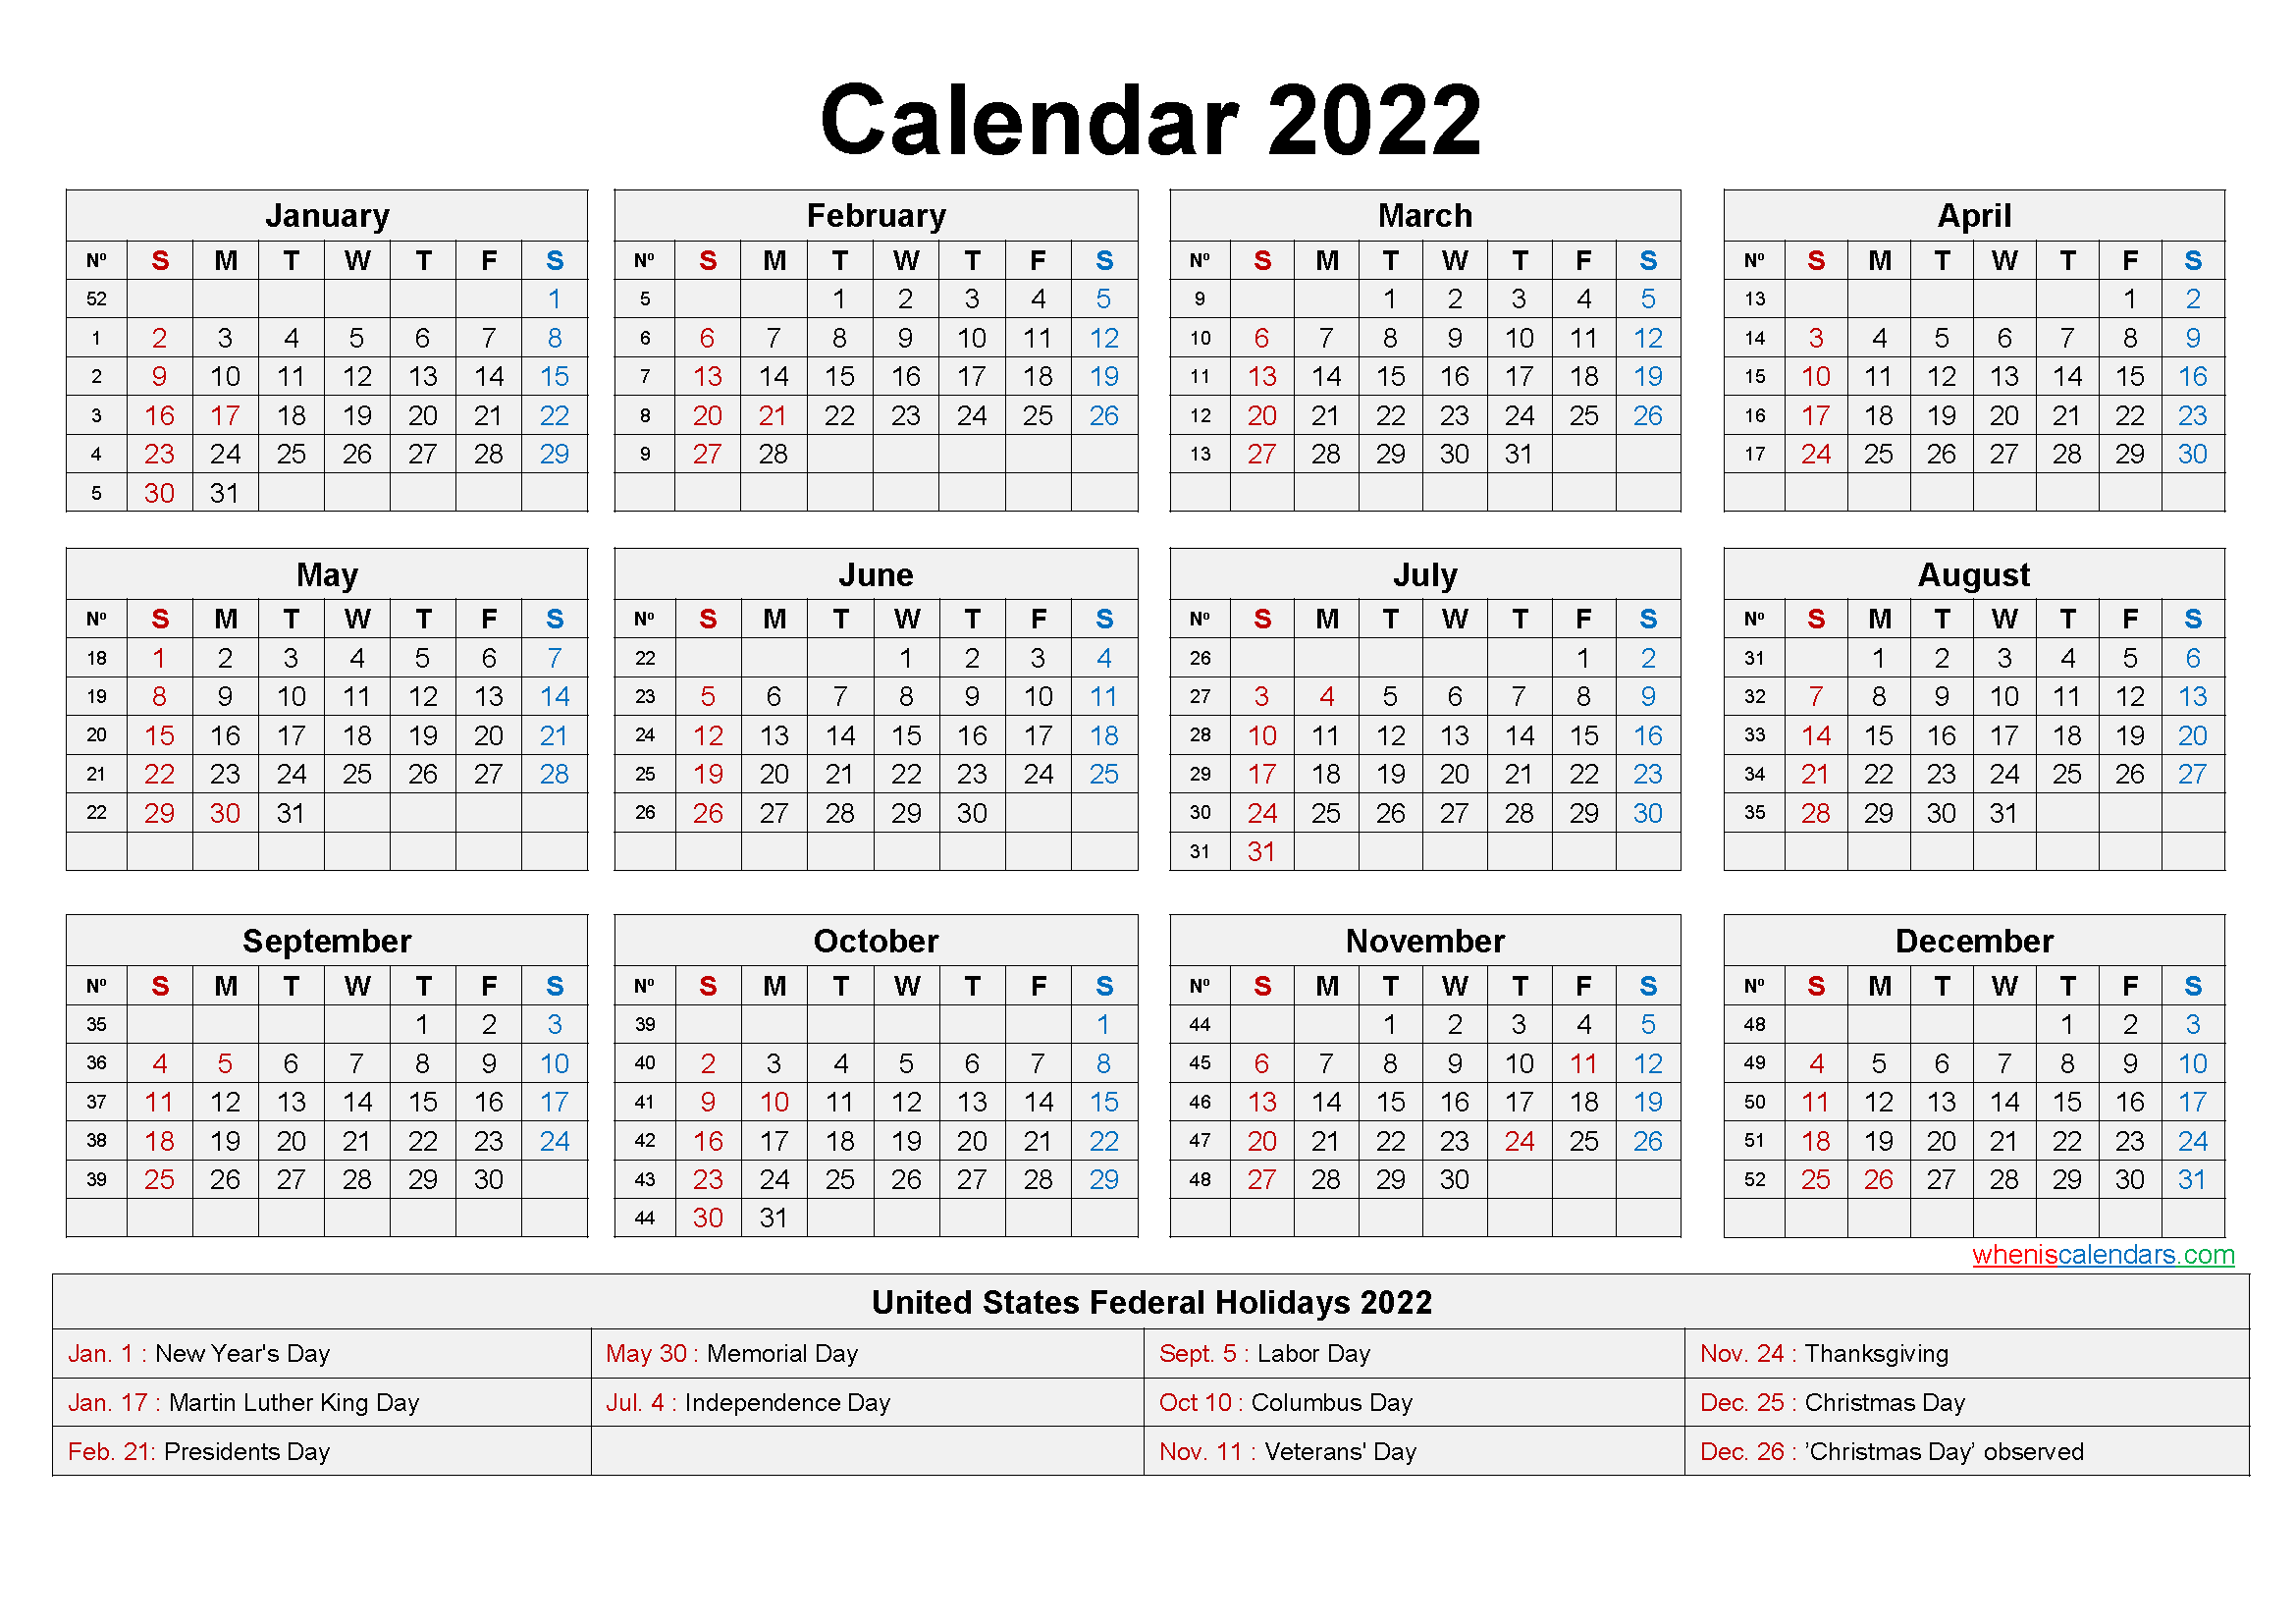 calendar with federal holidays 2022 Off 72